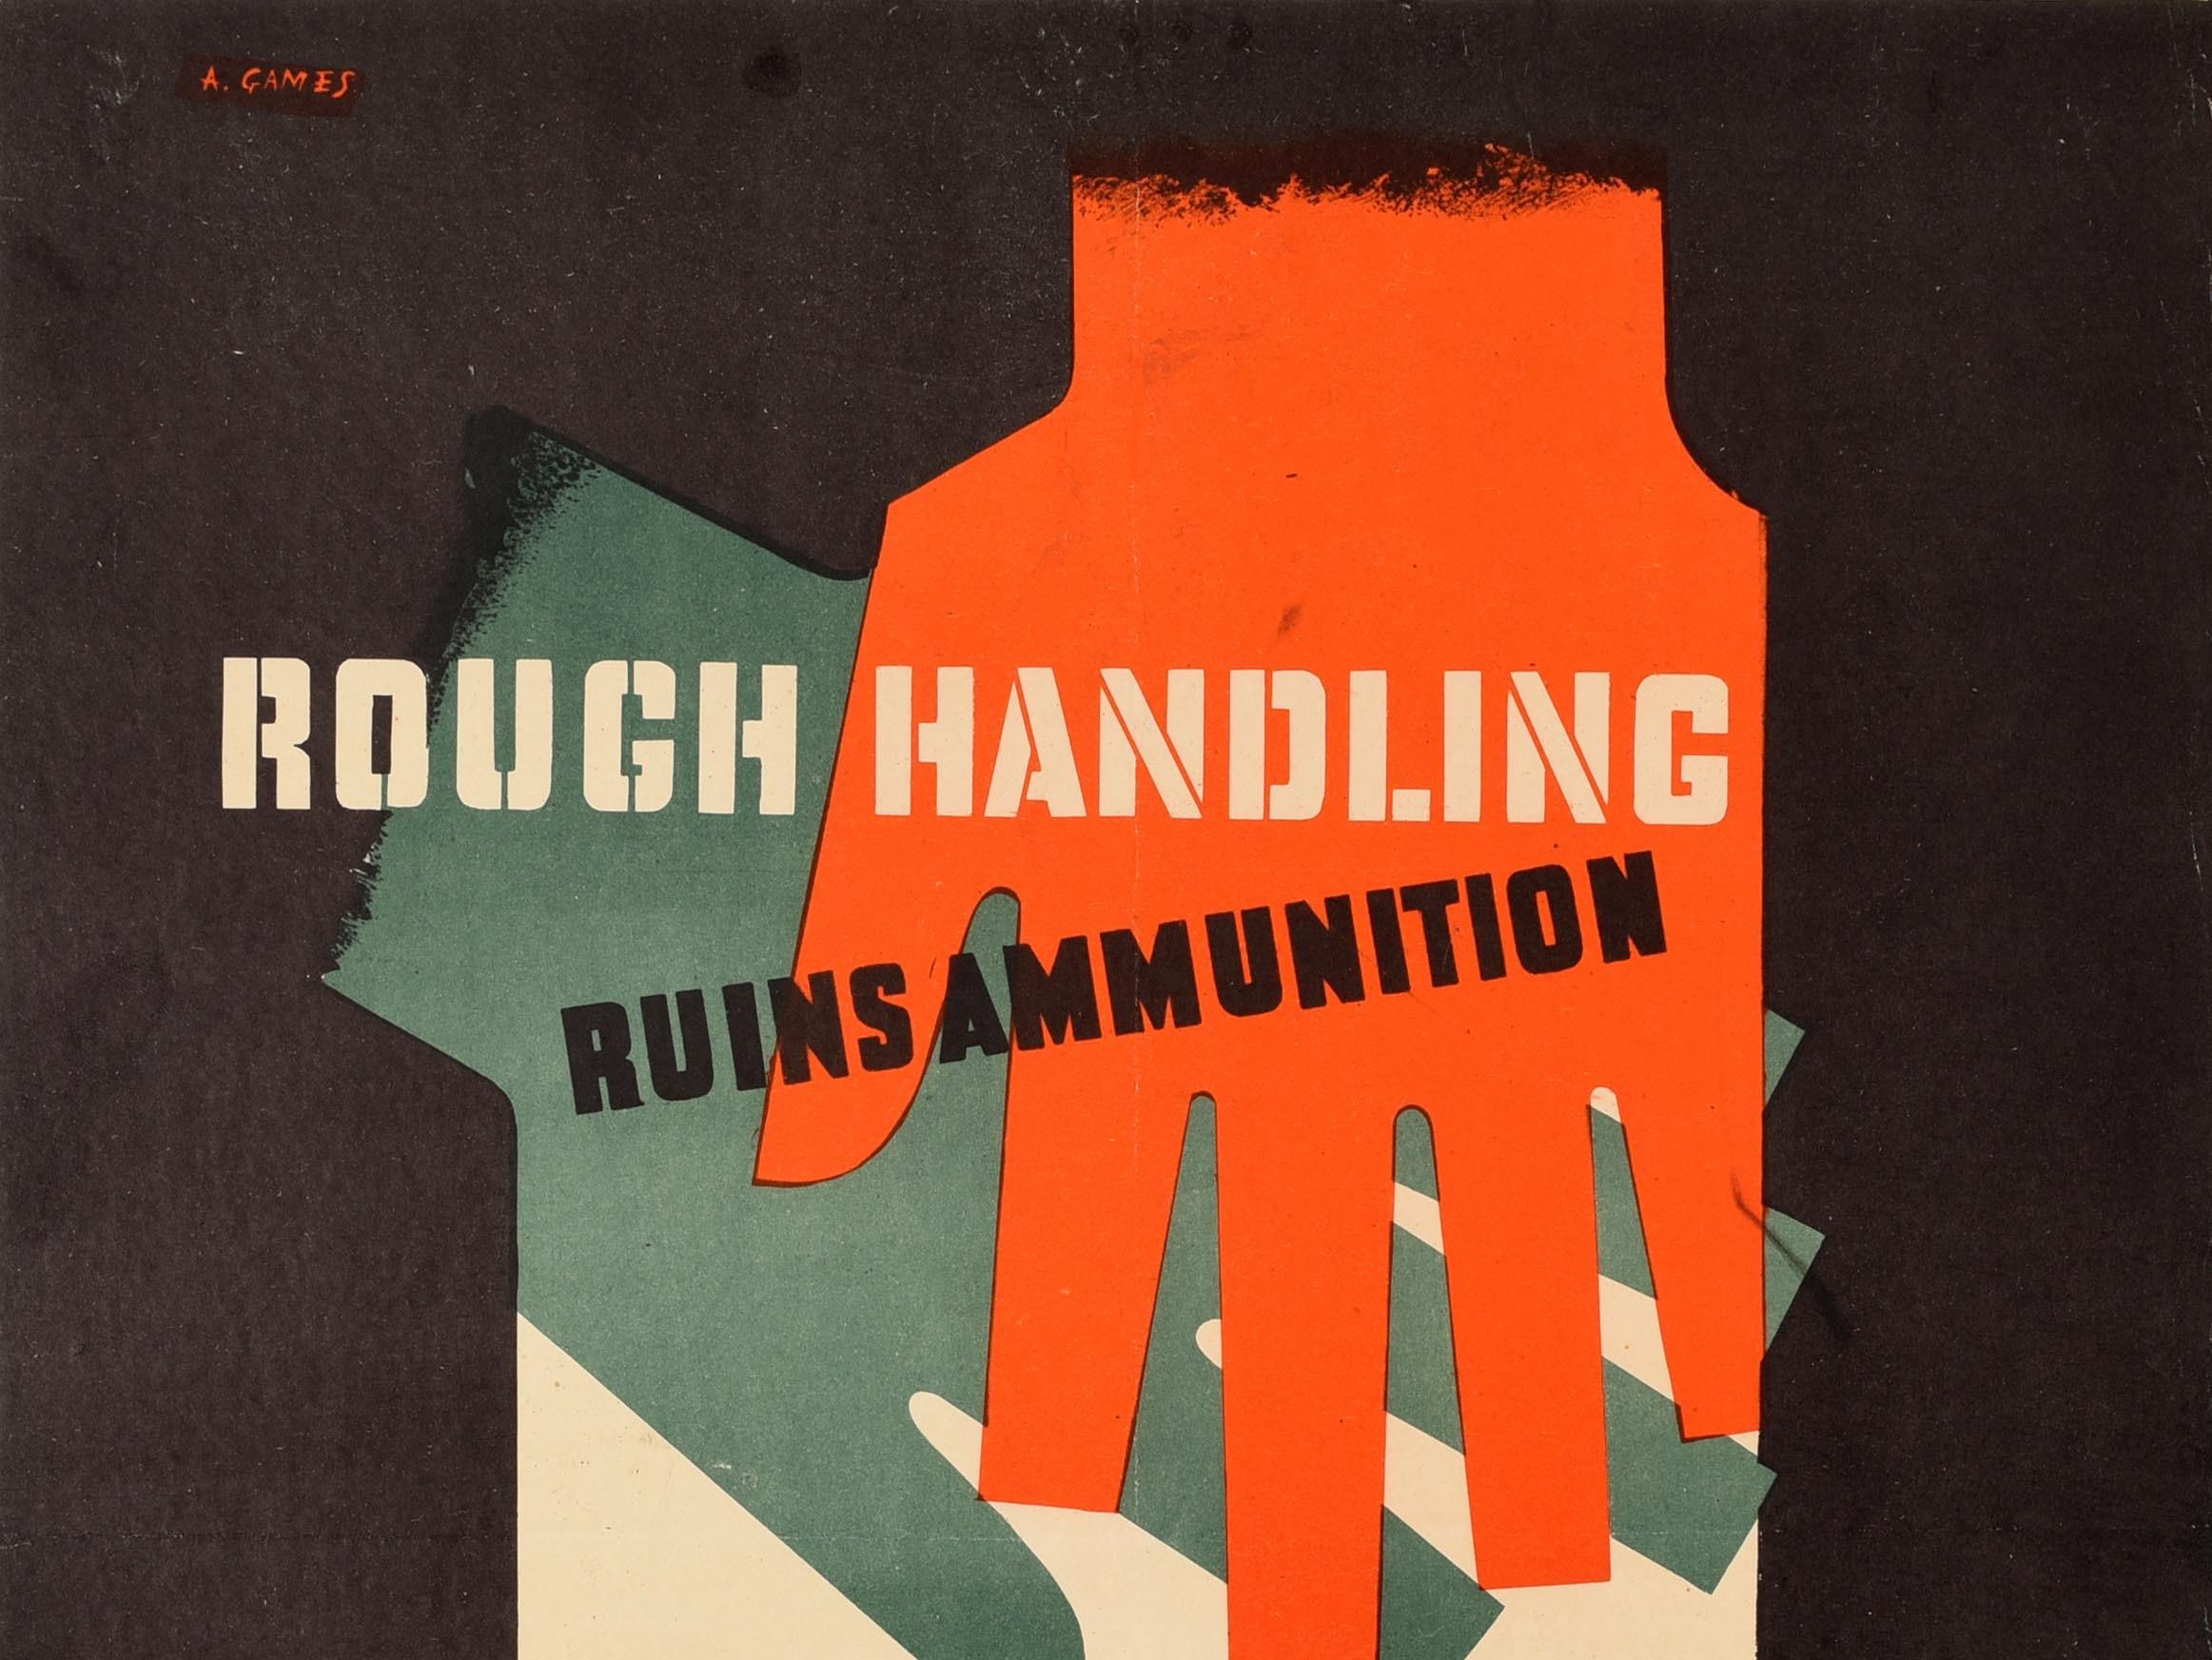 Original Vintage WWII Poster Rough Handling Ruins Ammunition Safety Care Warning - Print by Abram Games